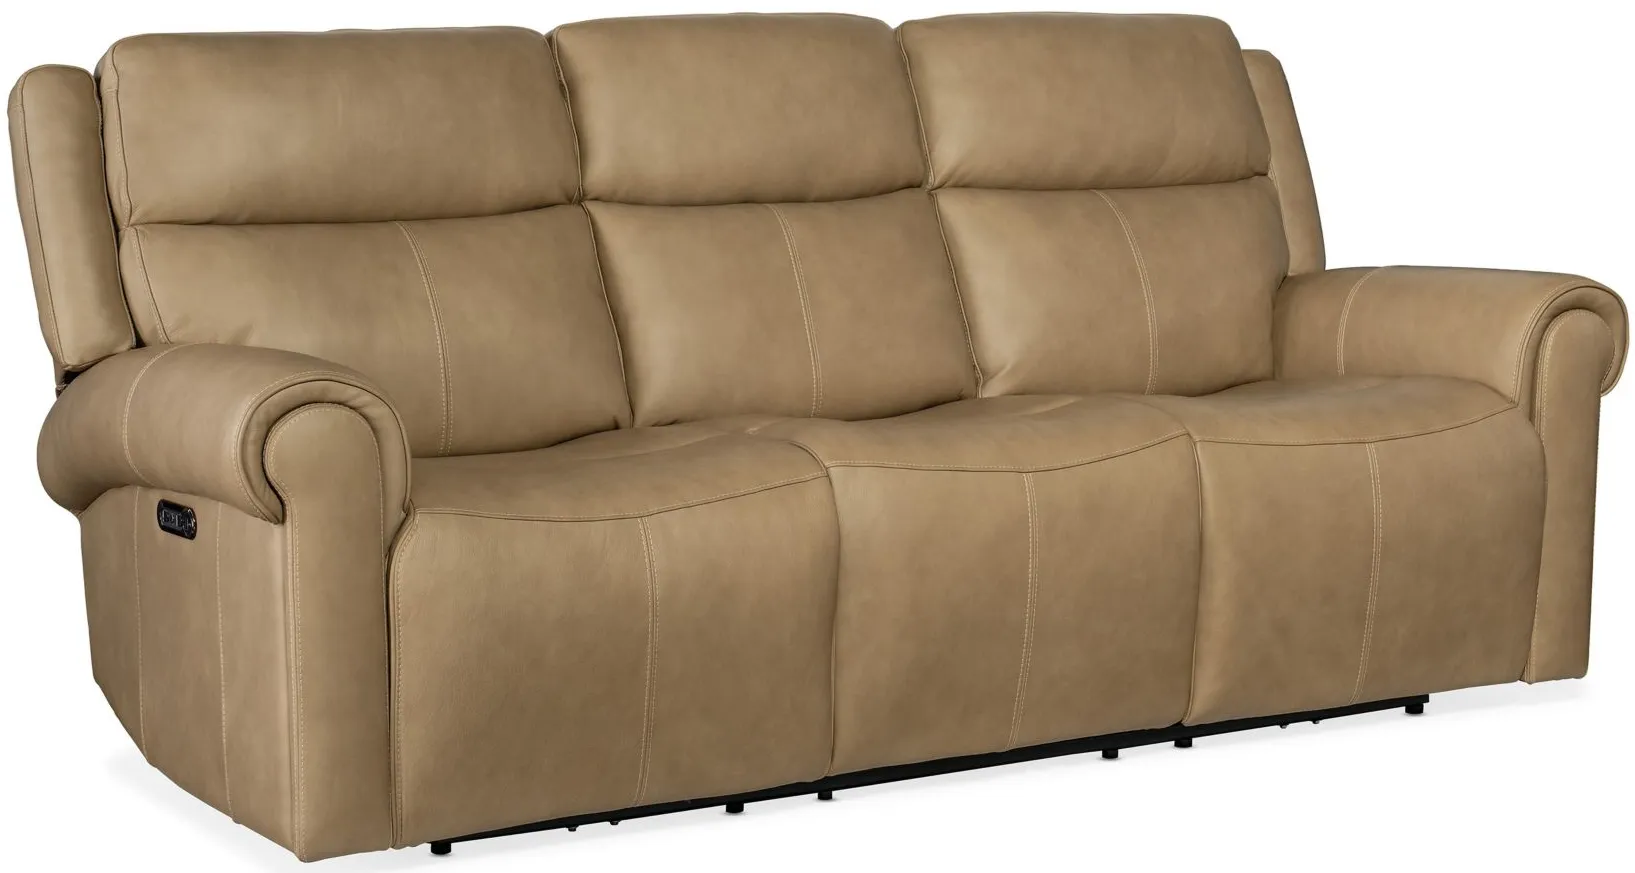 Oberon Zero Gravity Power Sofa in Caruso Sand by Hooker Furniture